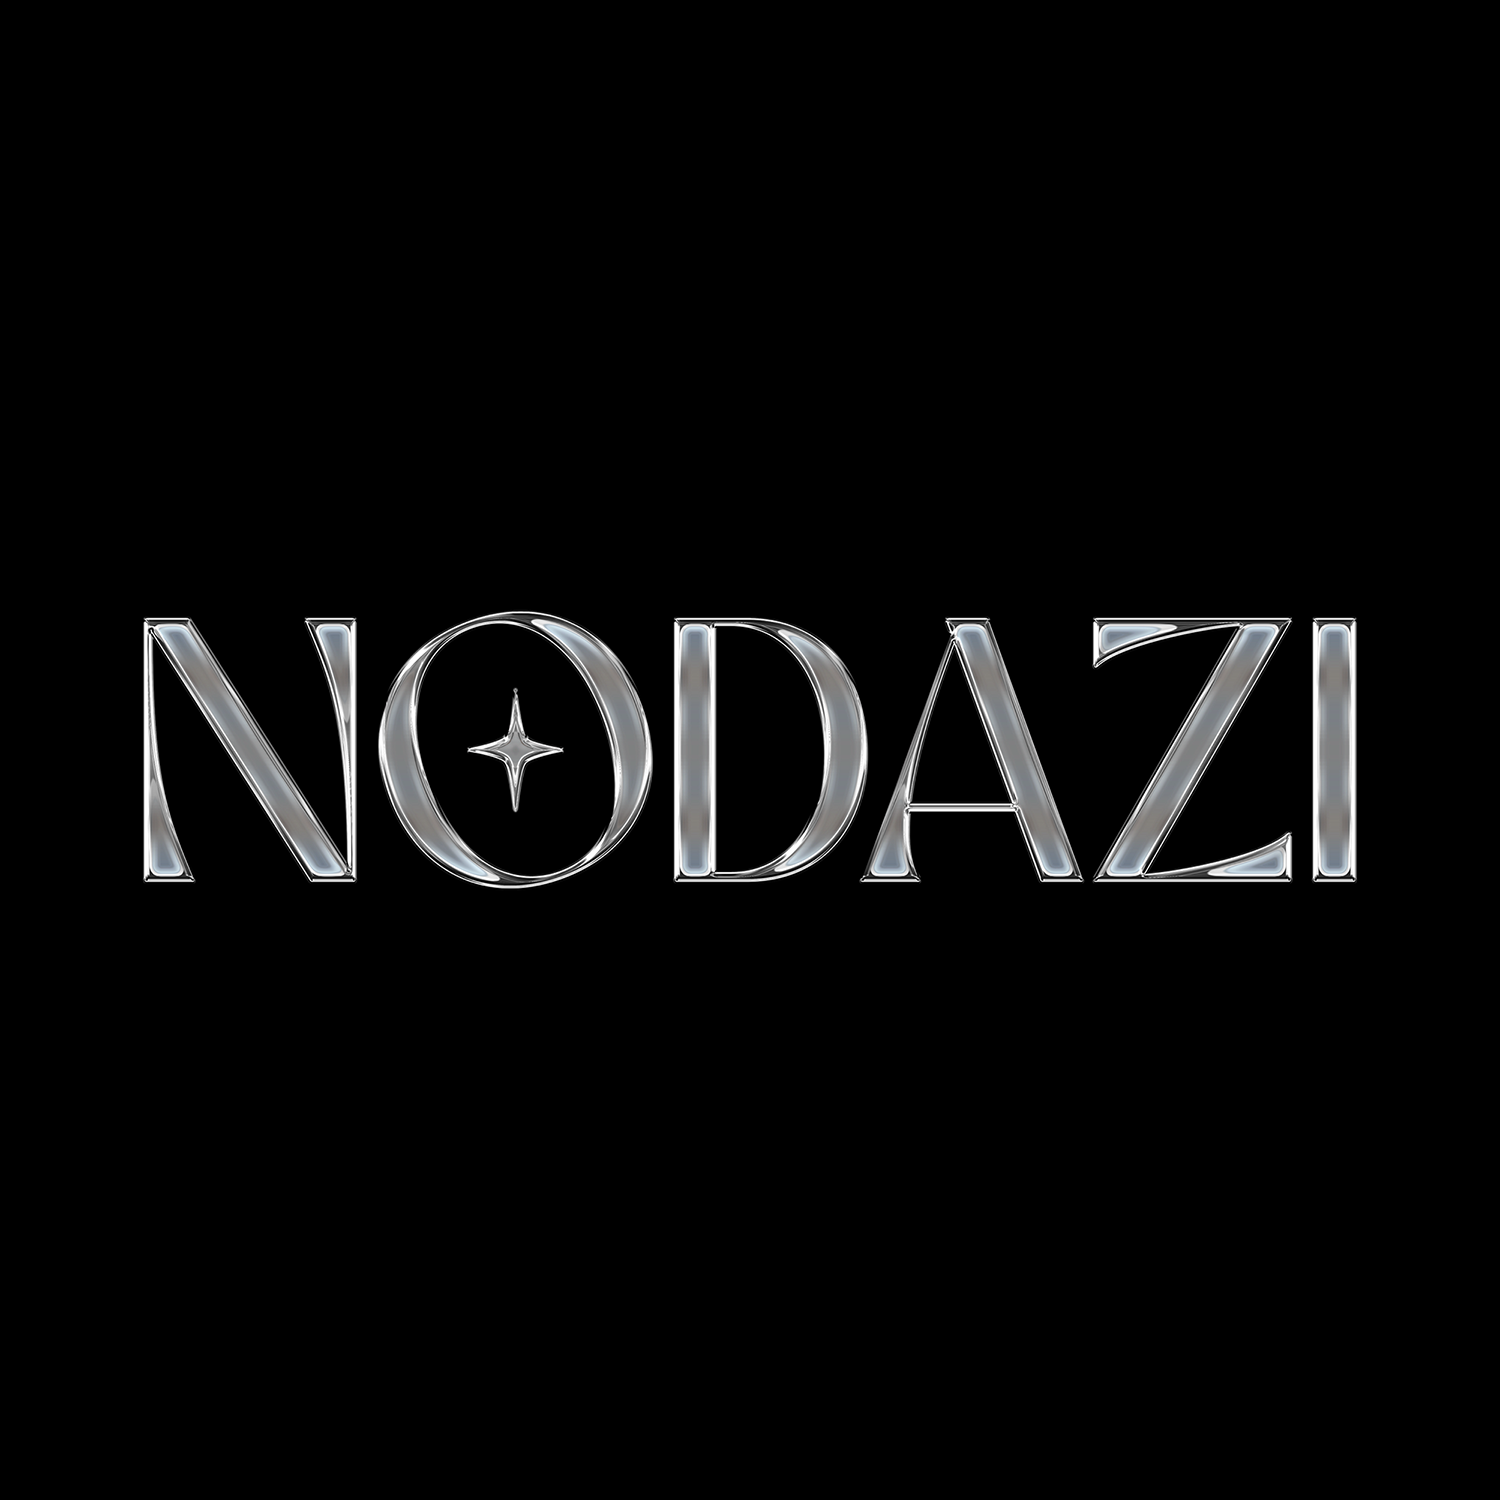 Nodazi Studio